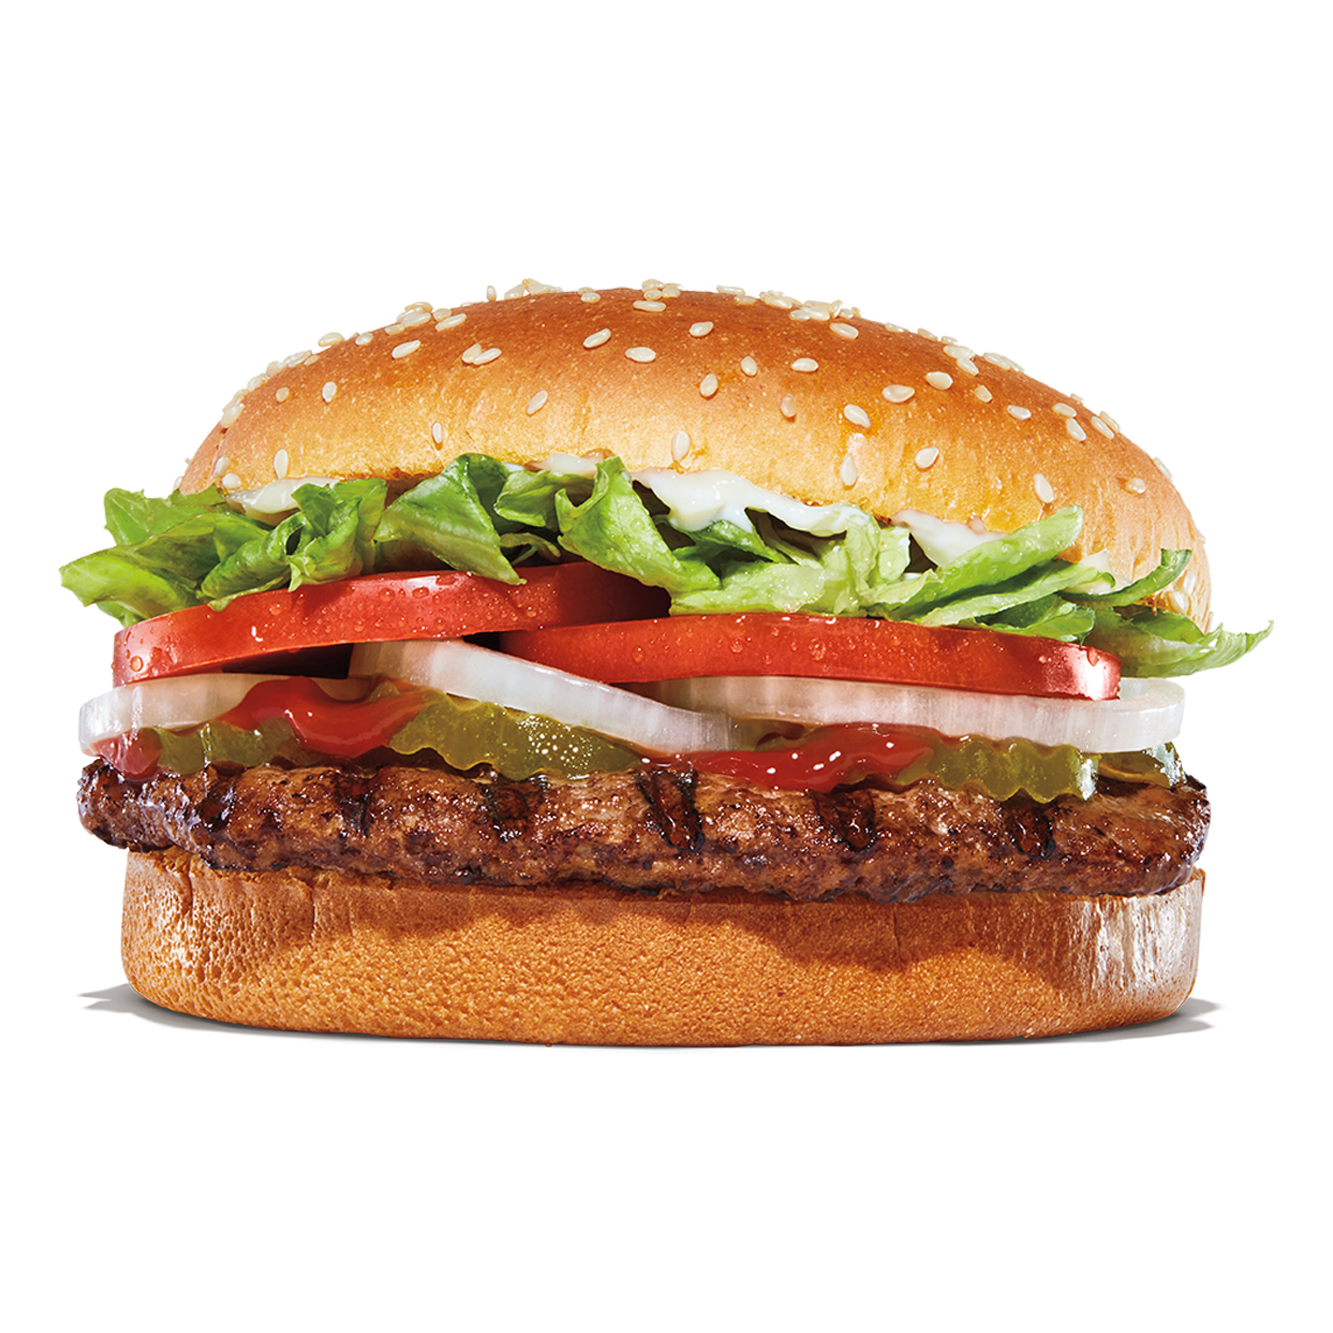 Burger King Laredo (956)462-5092